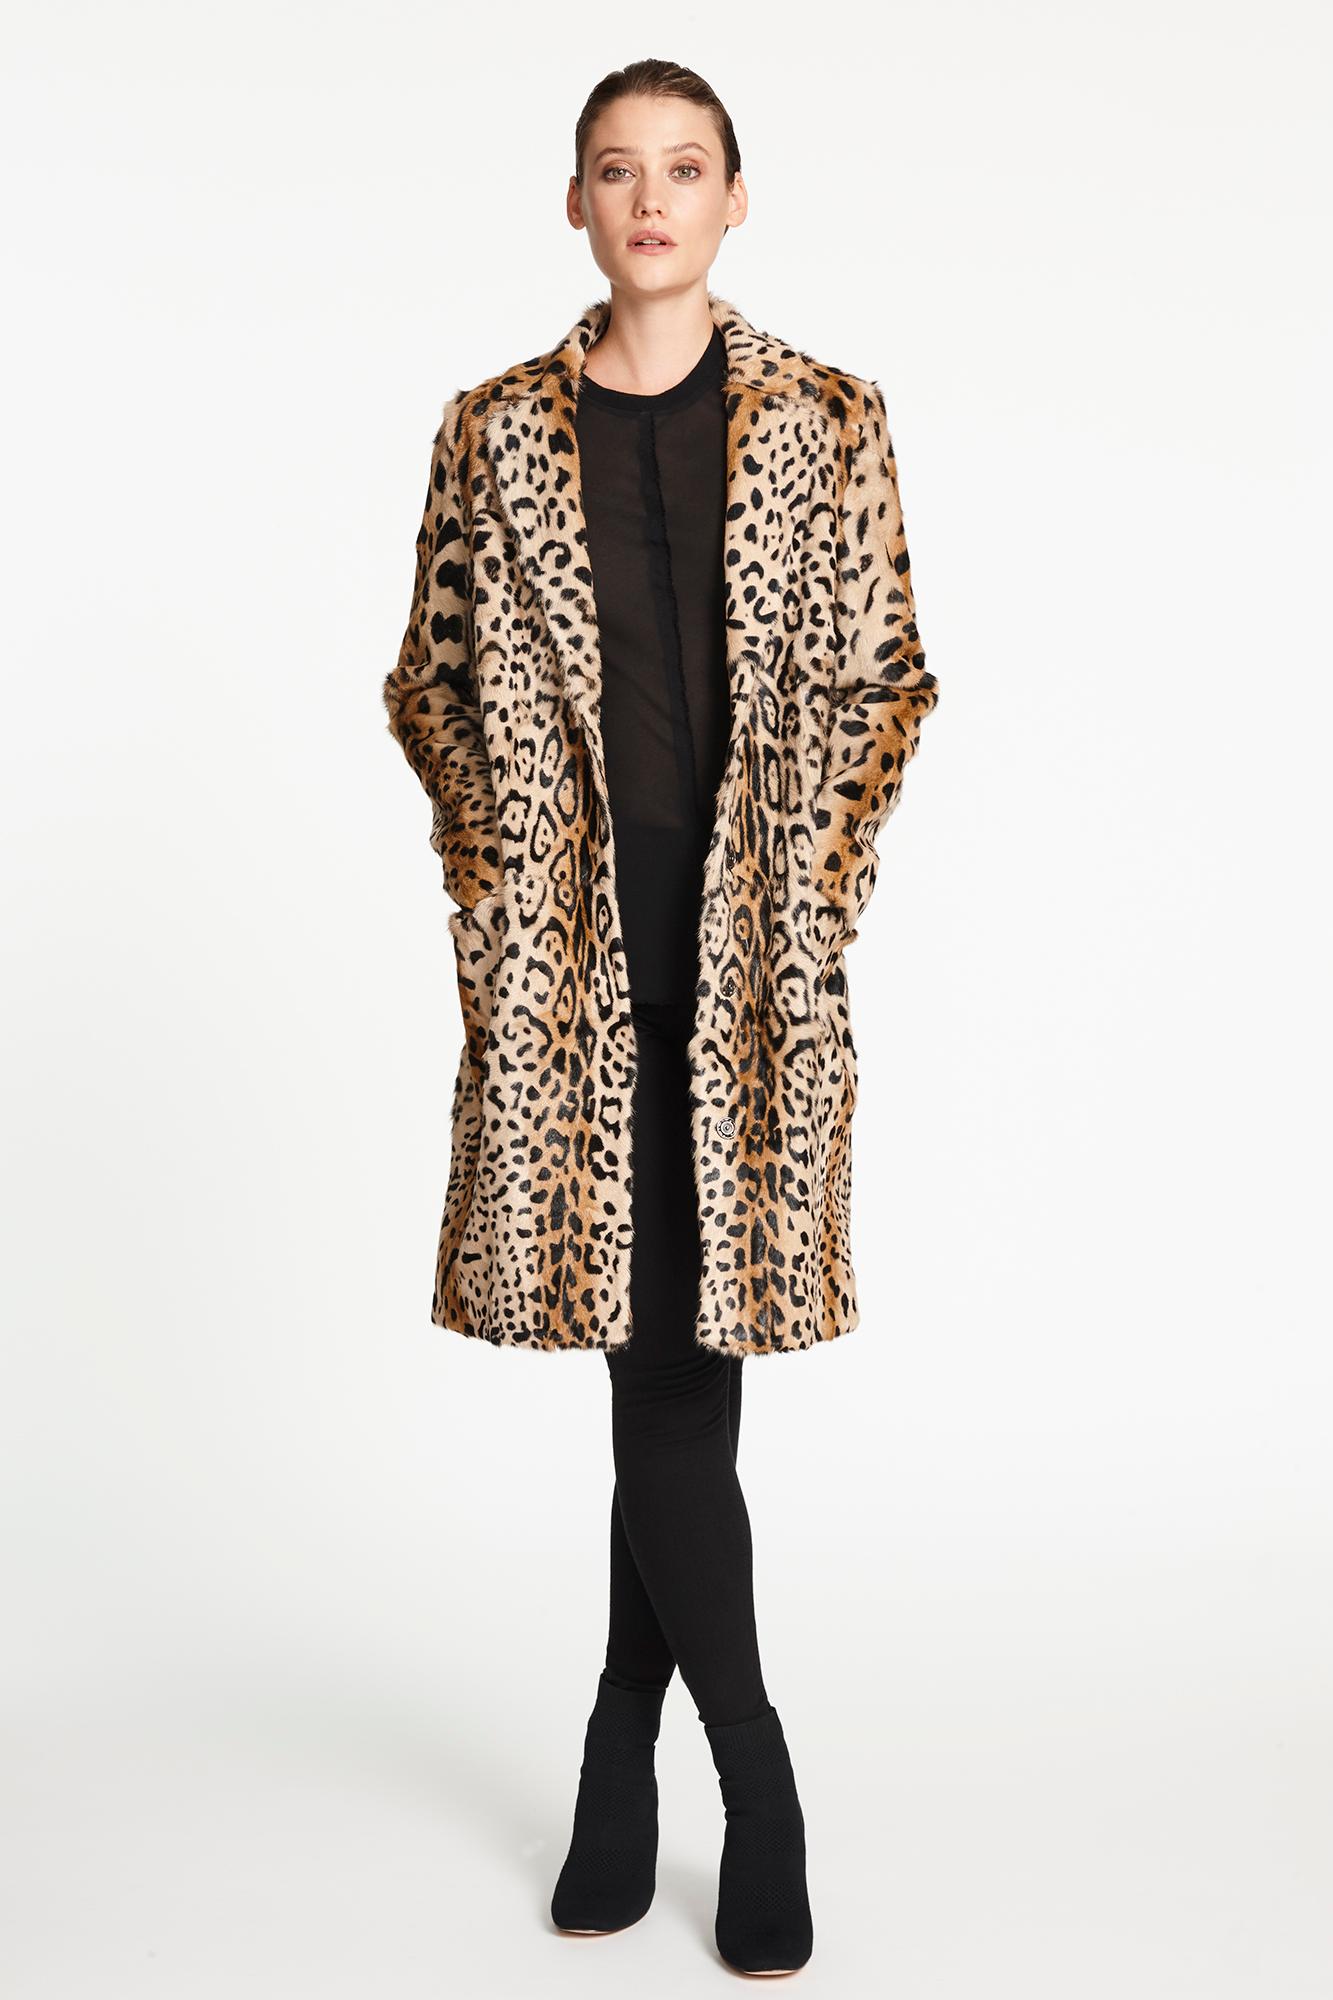 Women's Verheyen London Leopard Print Coat in Natural Goat Hair Fur UK 8 - Brand New 